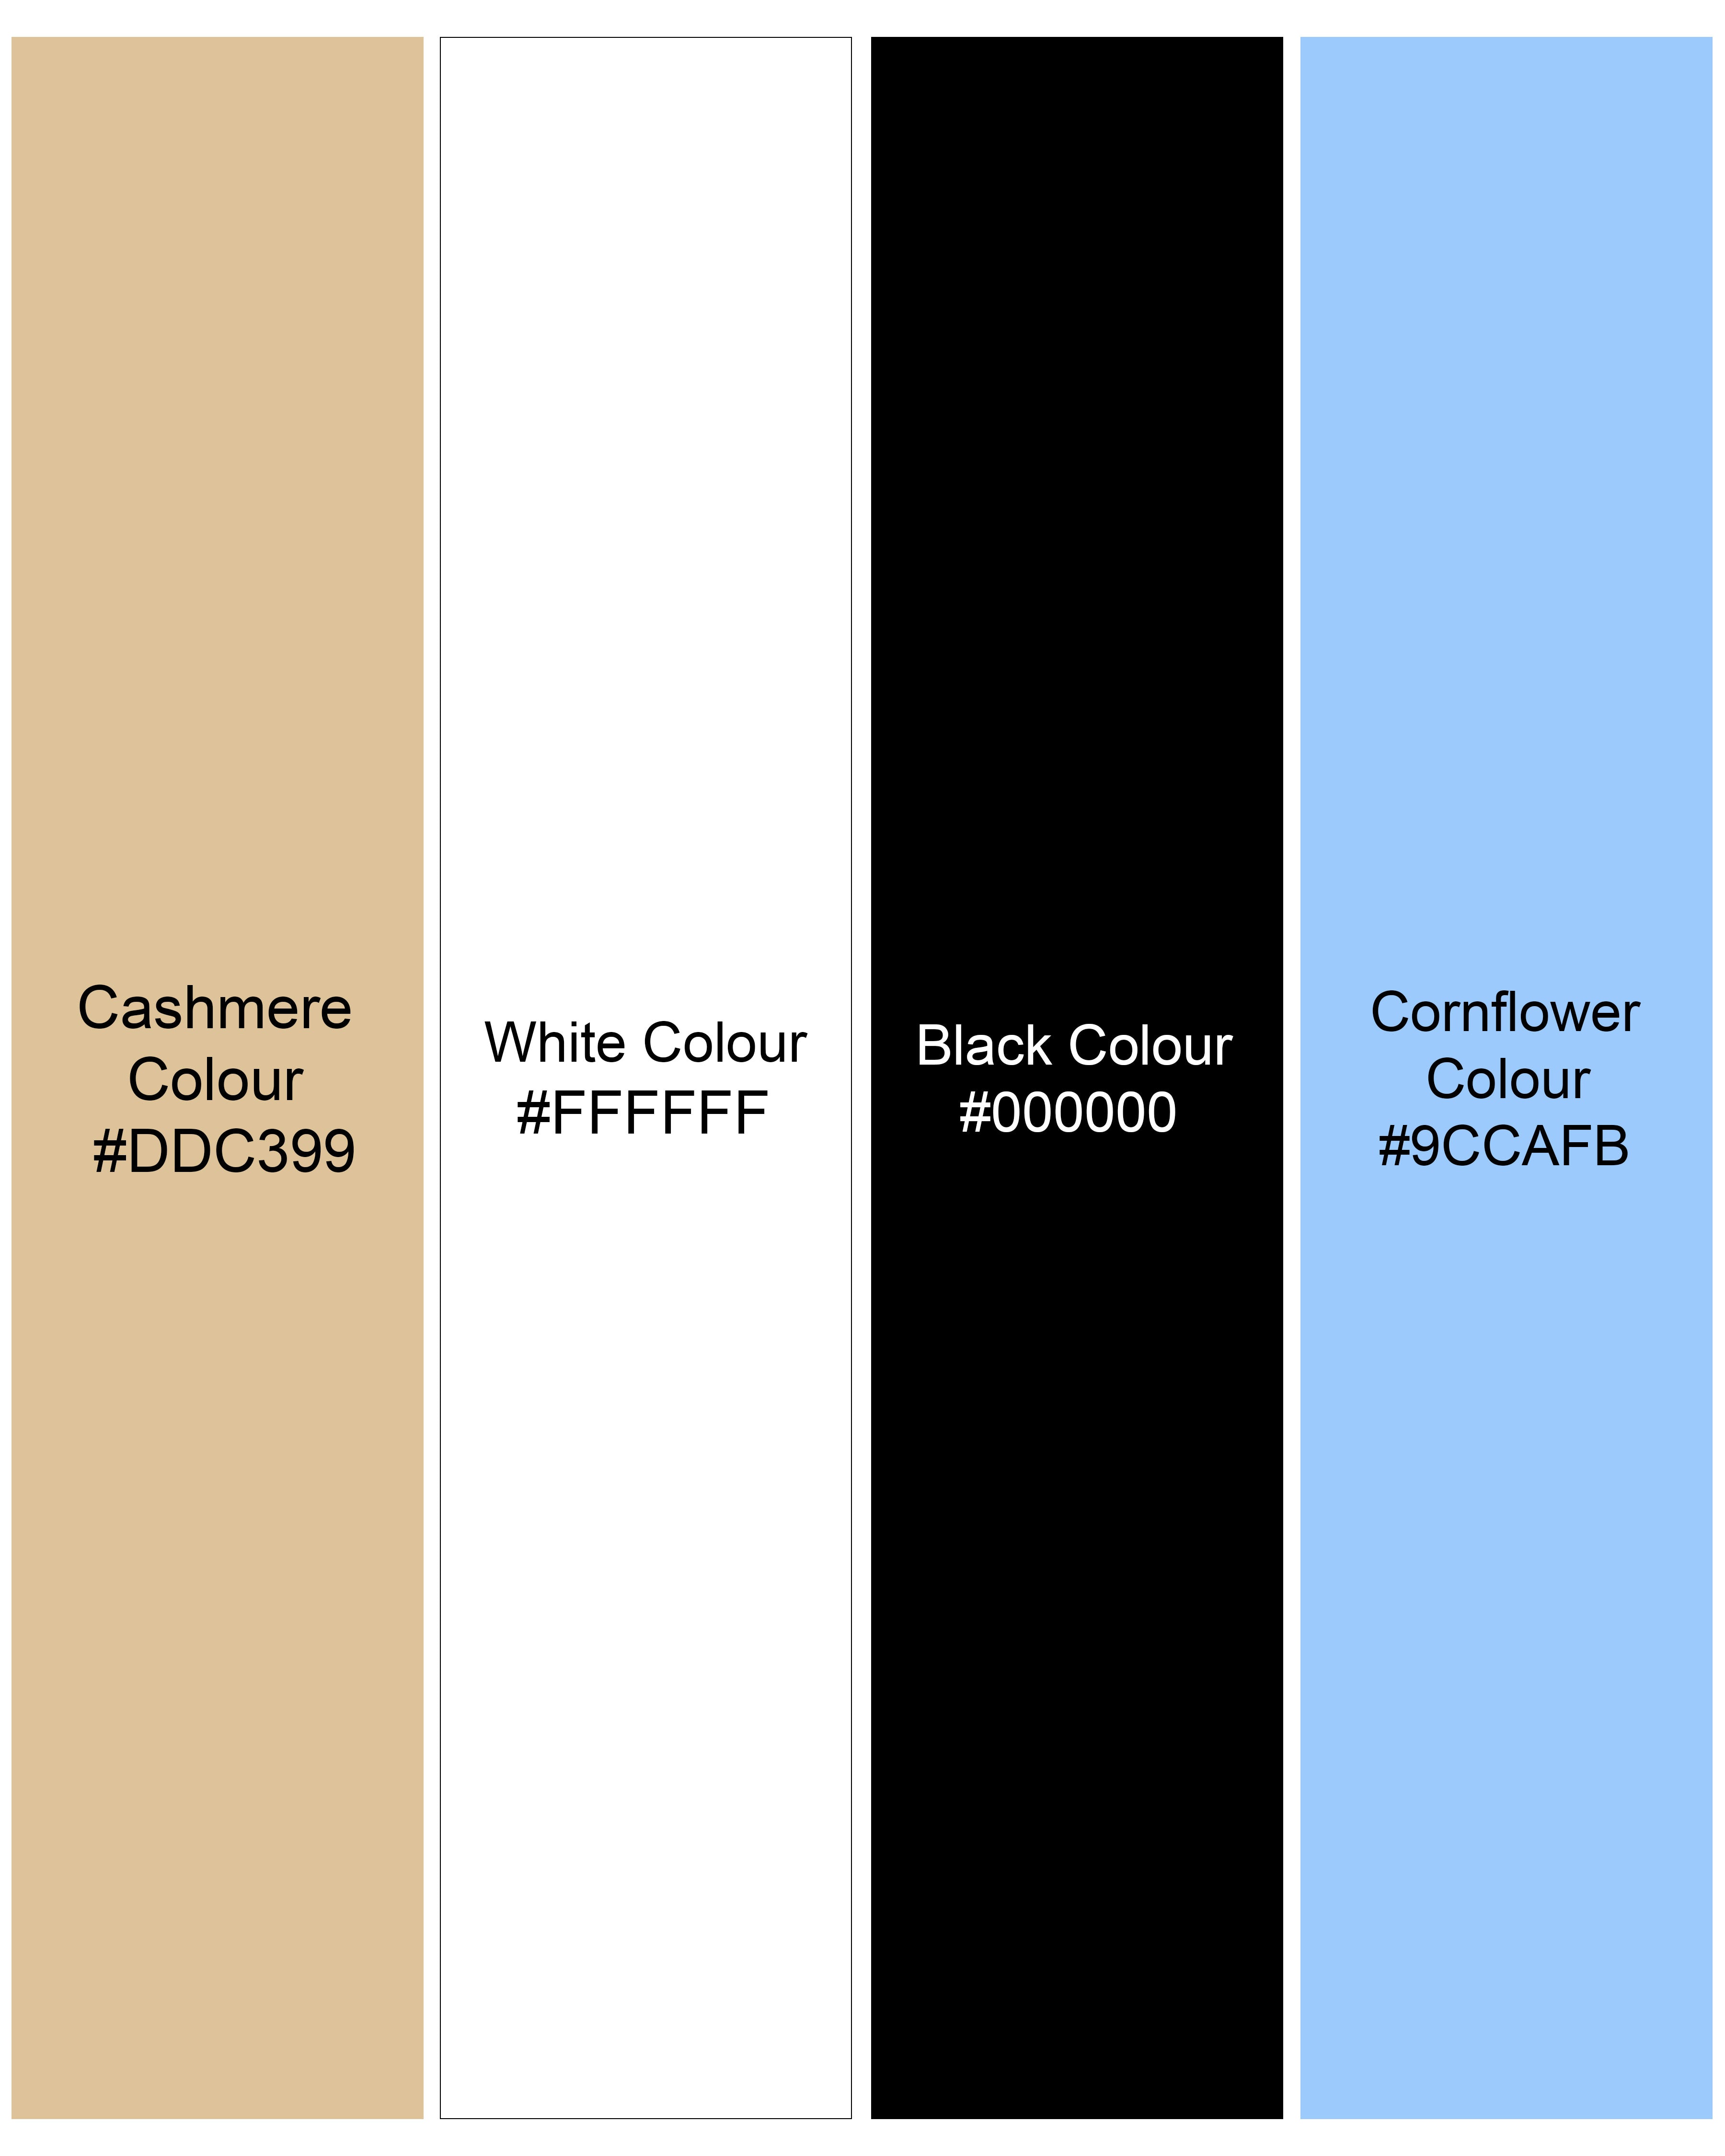 Cashmere Brown with White Multicolour Banjara Printed Super Soft Premium Cotton Shirt 9680-38, 9680-H-38, 9680-39, 9680-H-39, 9680-40, 9680-H-40, 9680-42, 9680-H-42, 9680-44, 9680-H-44, 9680-46, 9680-H-46, 9680-48, 9680-H-48, 9680-50, 9680-H-50, 9680-52, 9680-H-52